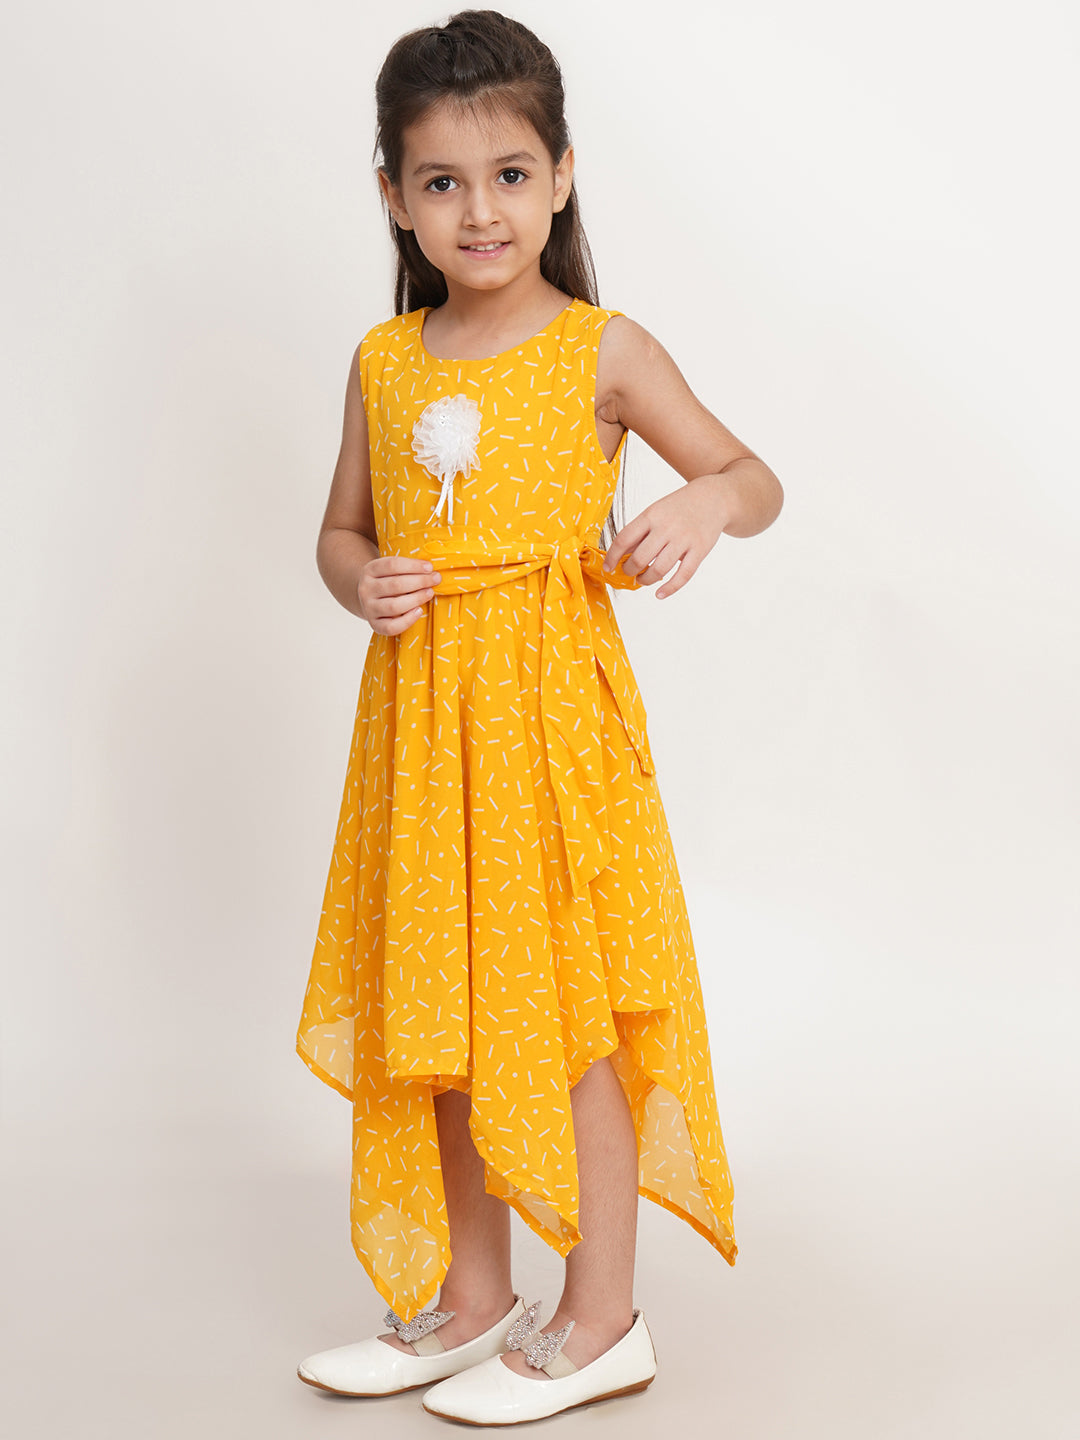 CREATIVE KID'S Childrens Yellow & White Geometry Print High-Low Dress